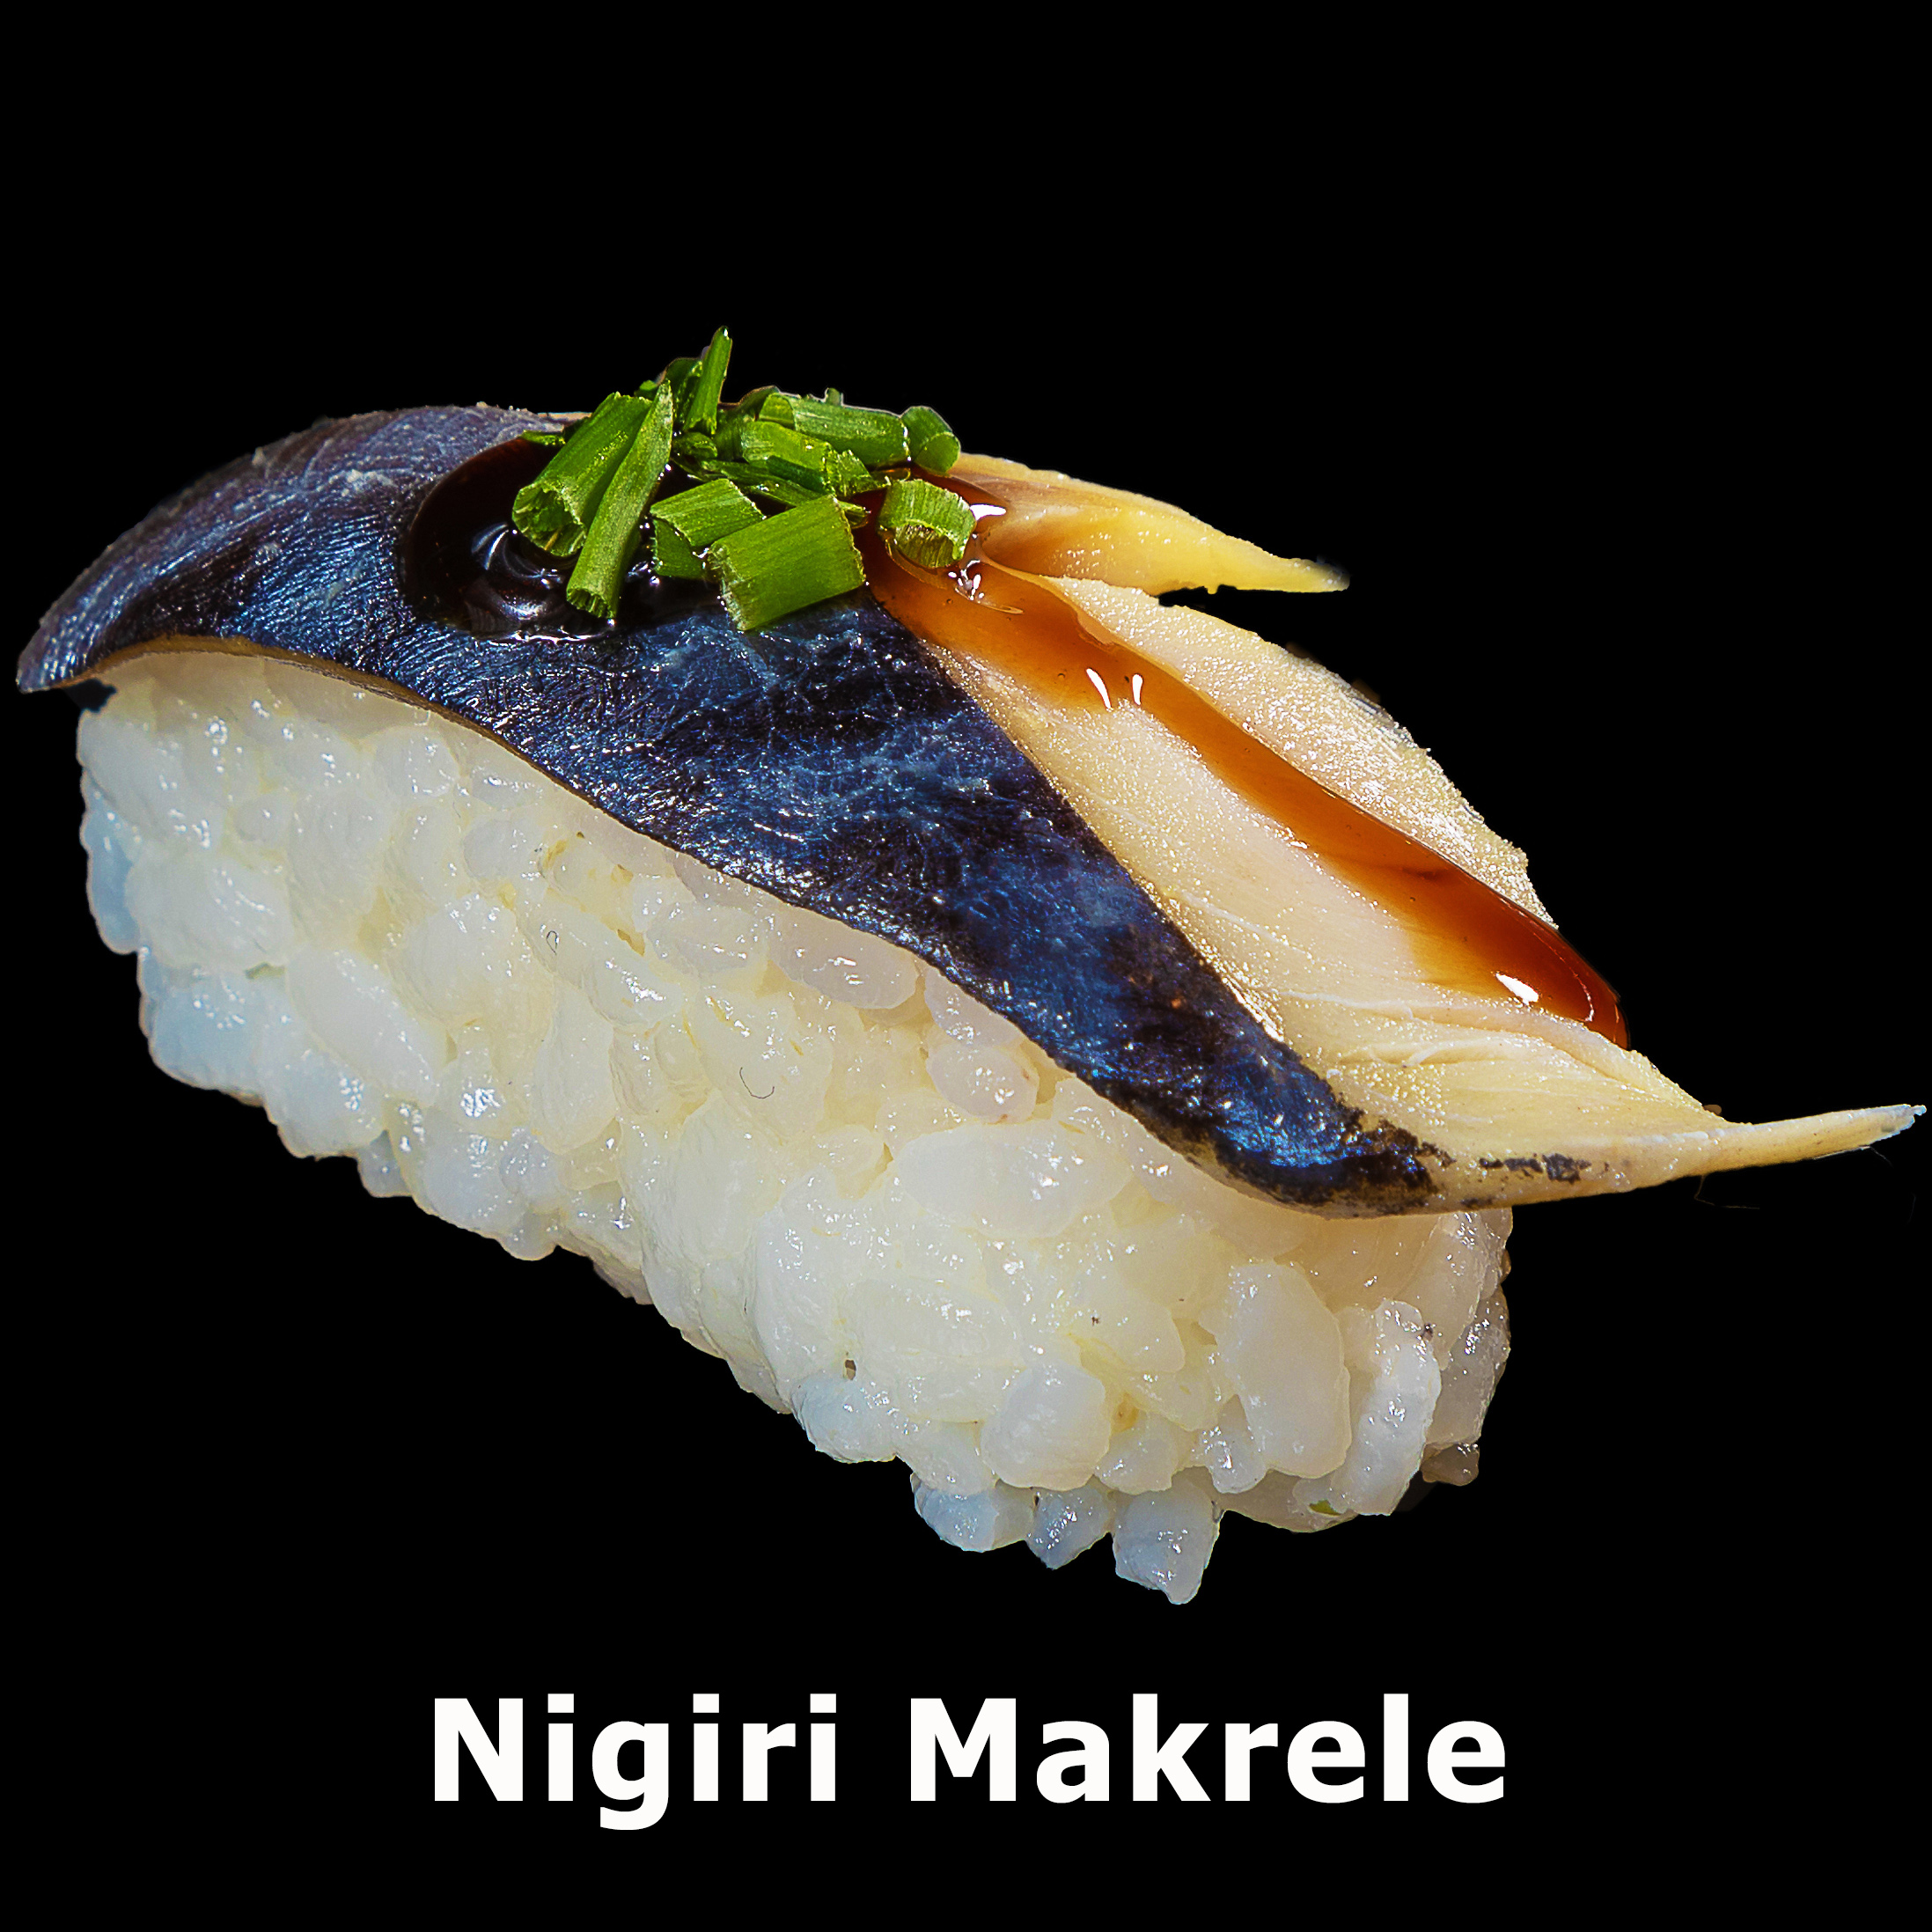 58. Nigiri Makrele